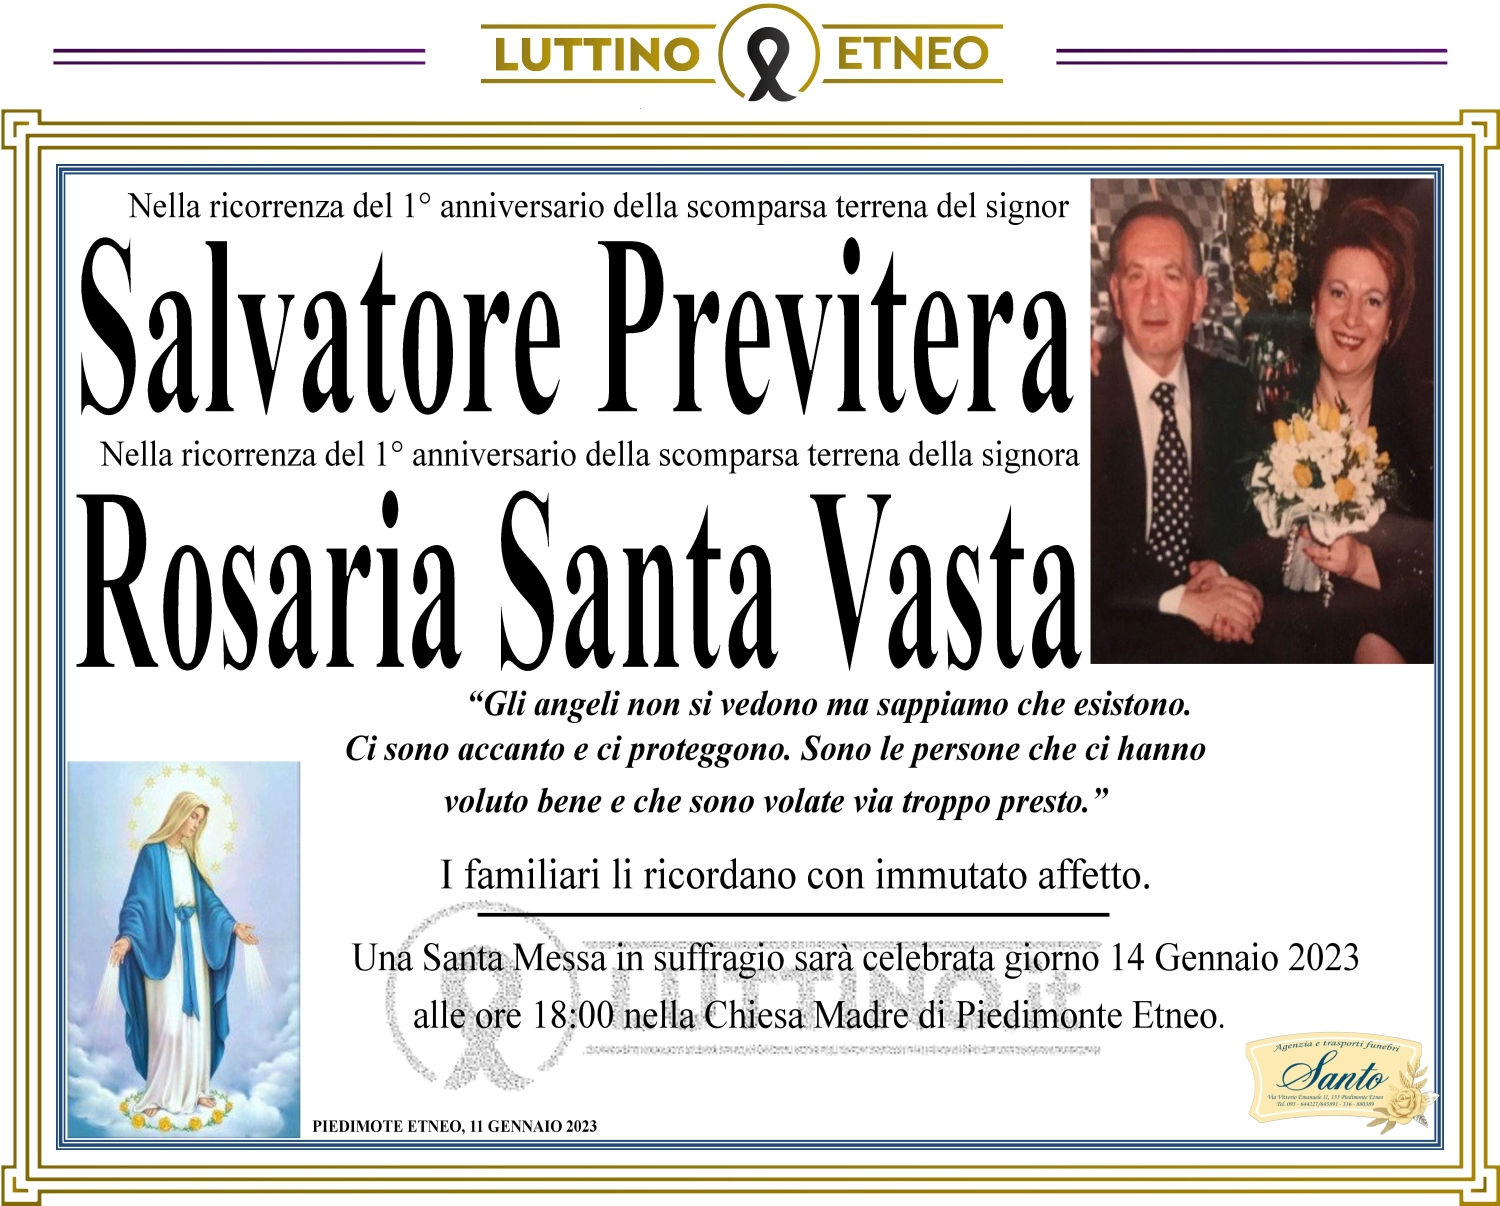 Rosaria Santa Vasta  e Salvatore Previtera